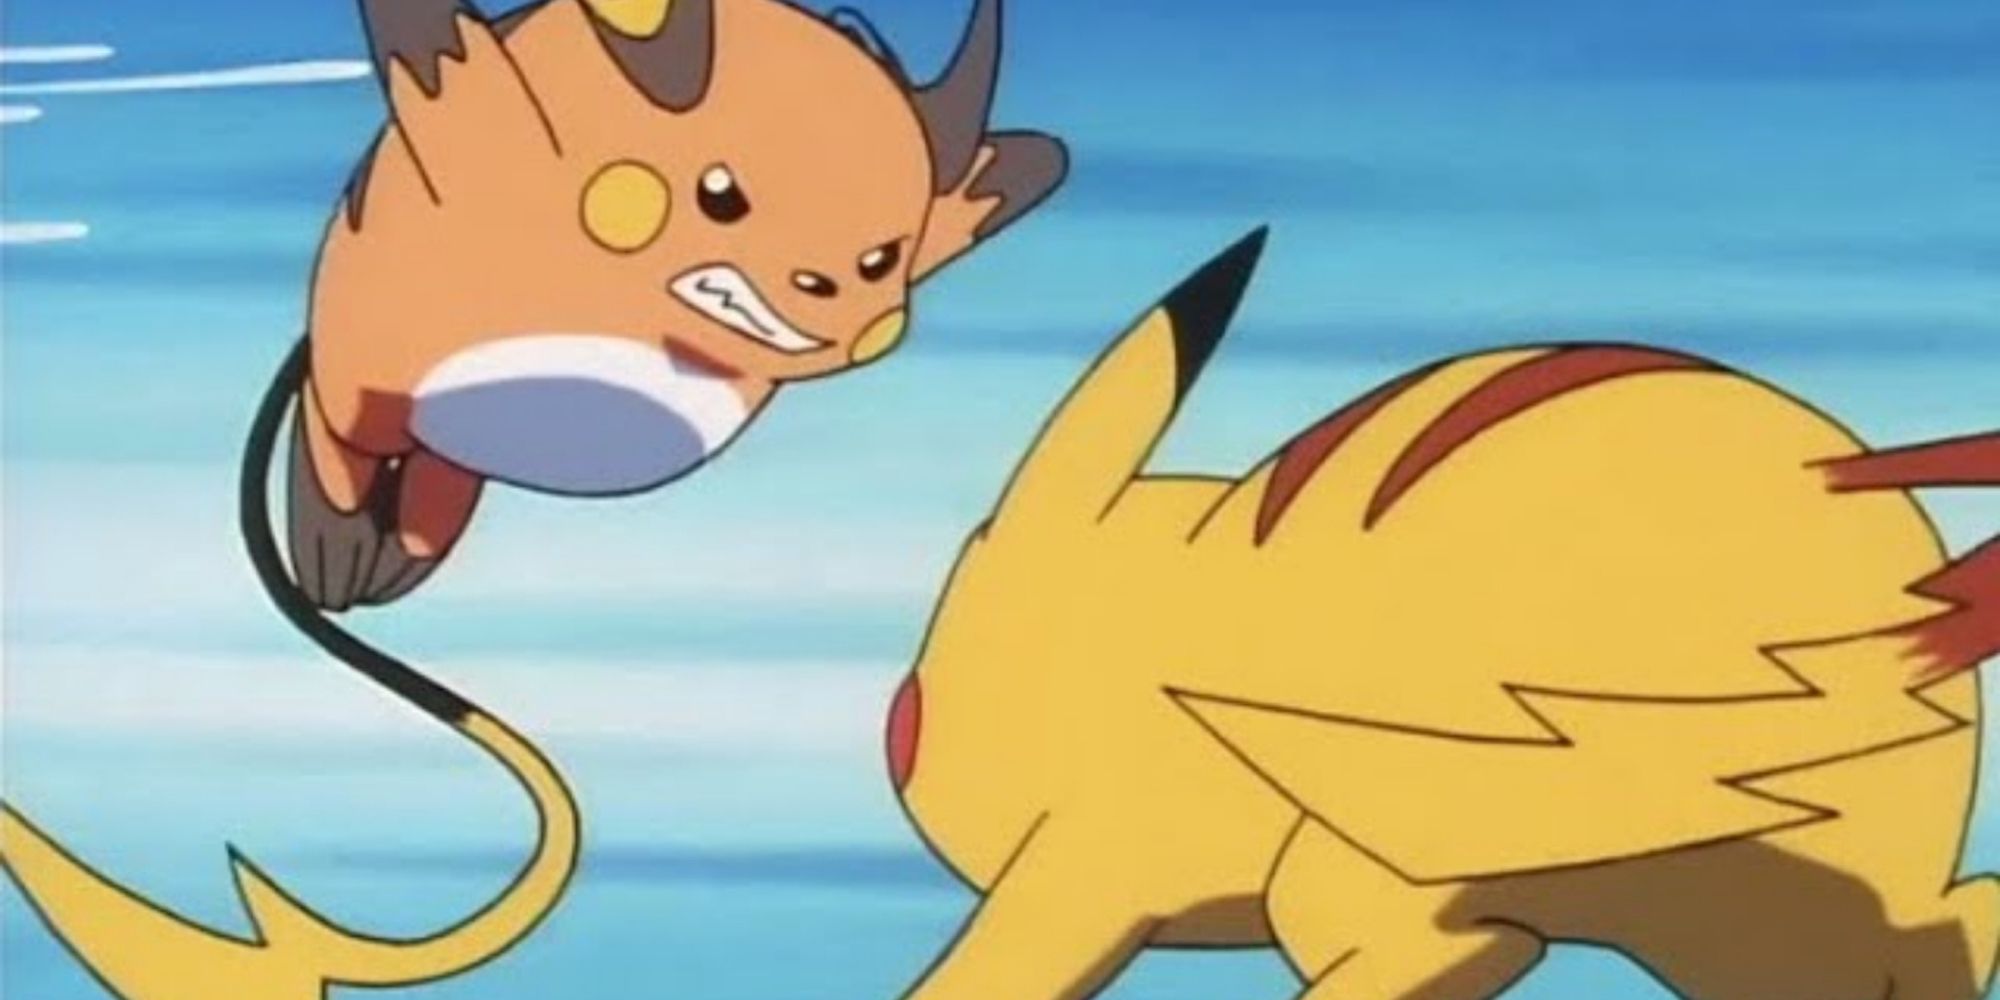 Raichu fighting Pikachu in the Pokemon anime